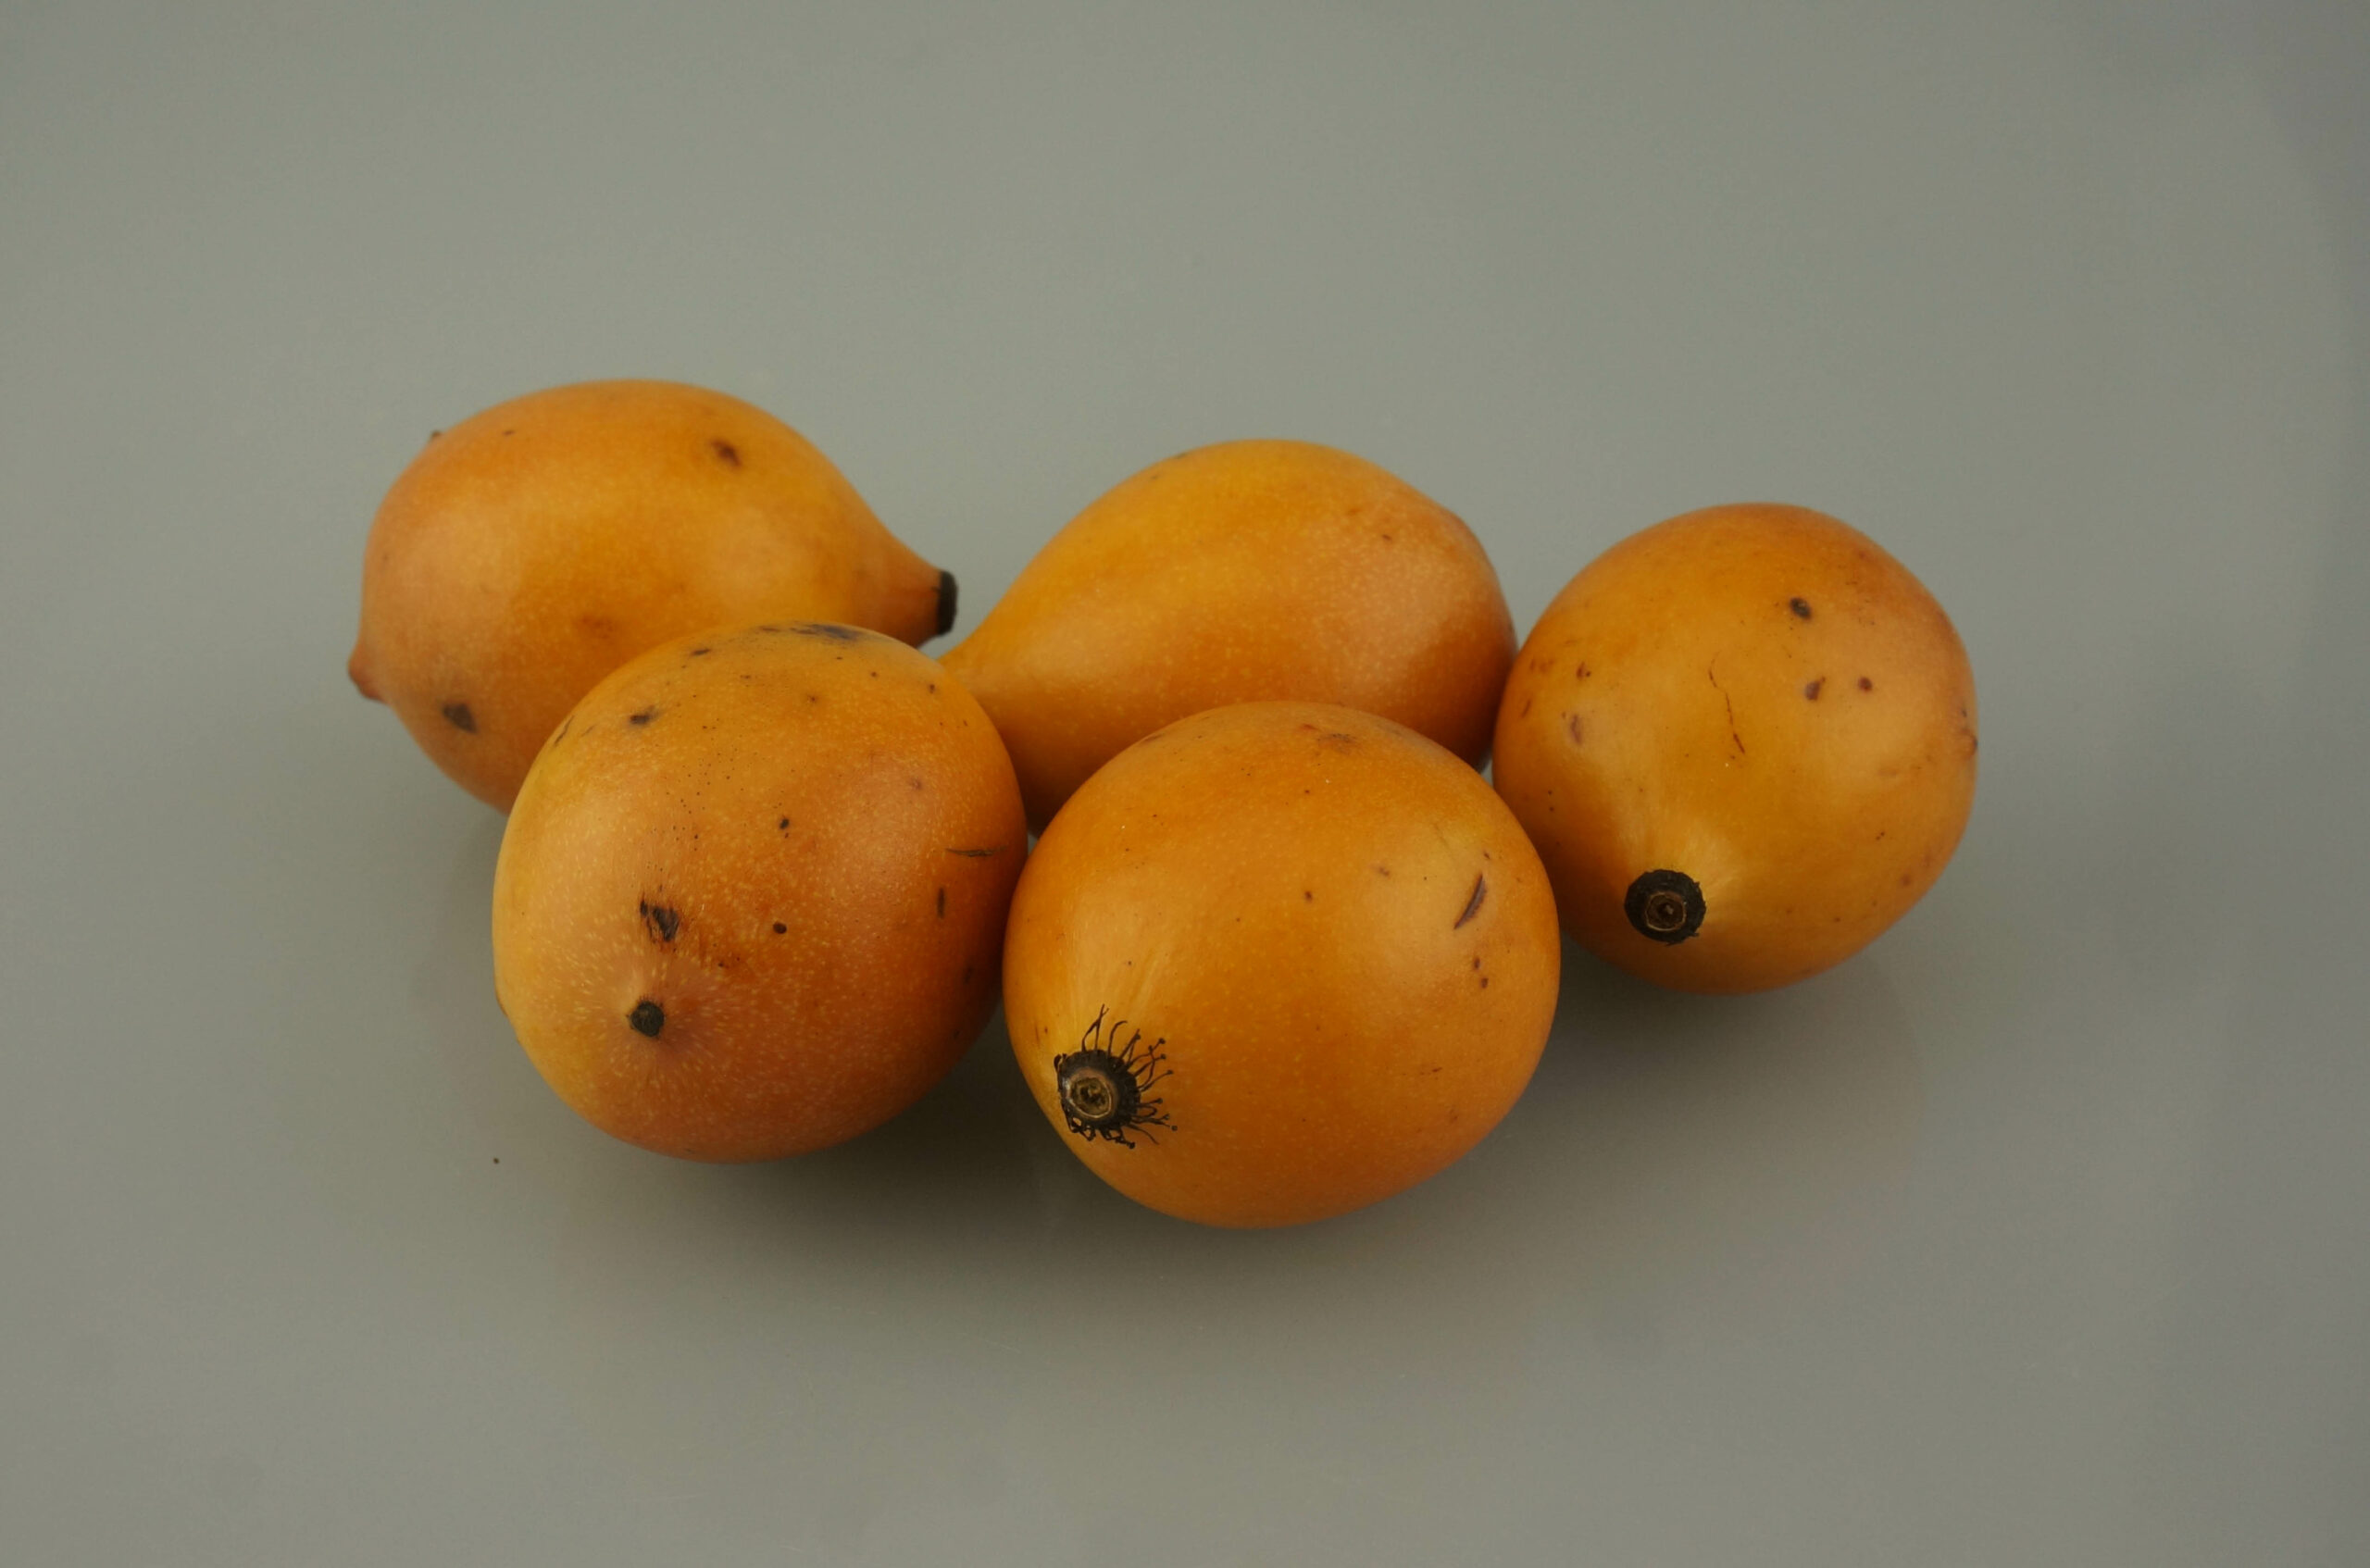 National fruit of Bolivia